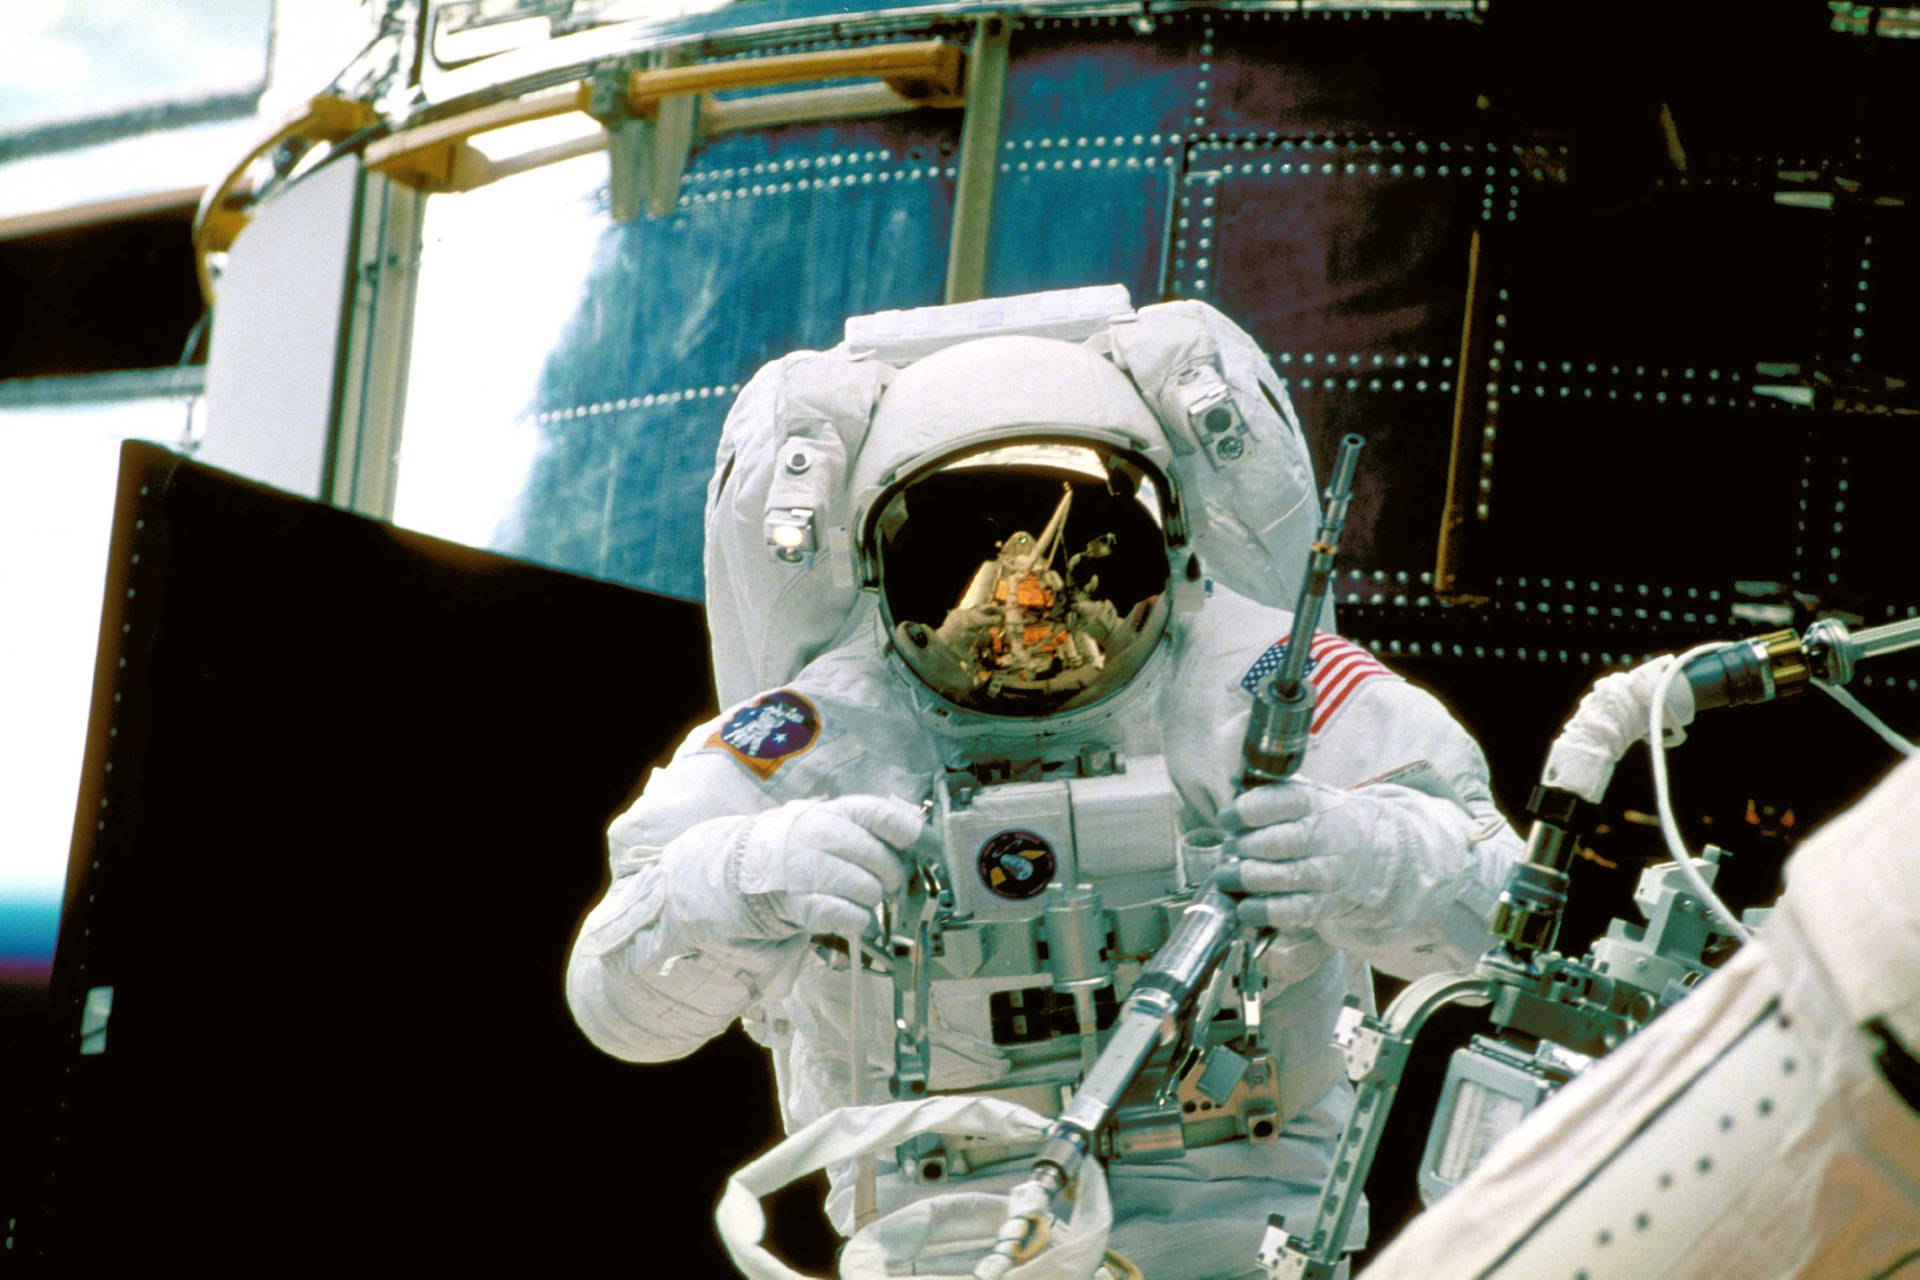 Nasa Aesthetic Photo Of An Astronaut